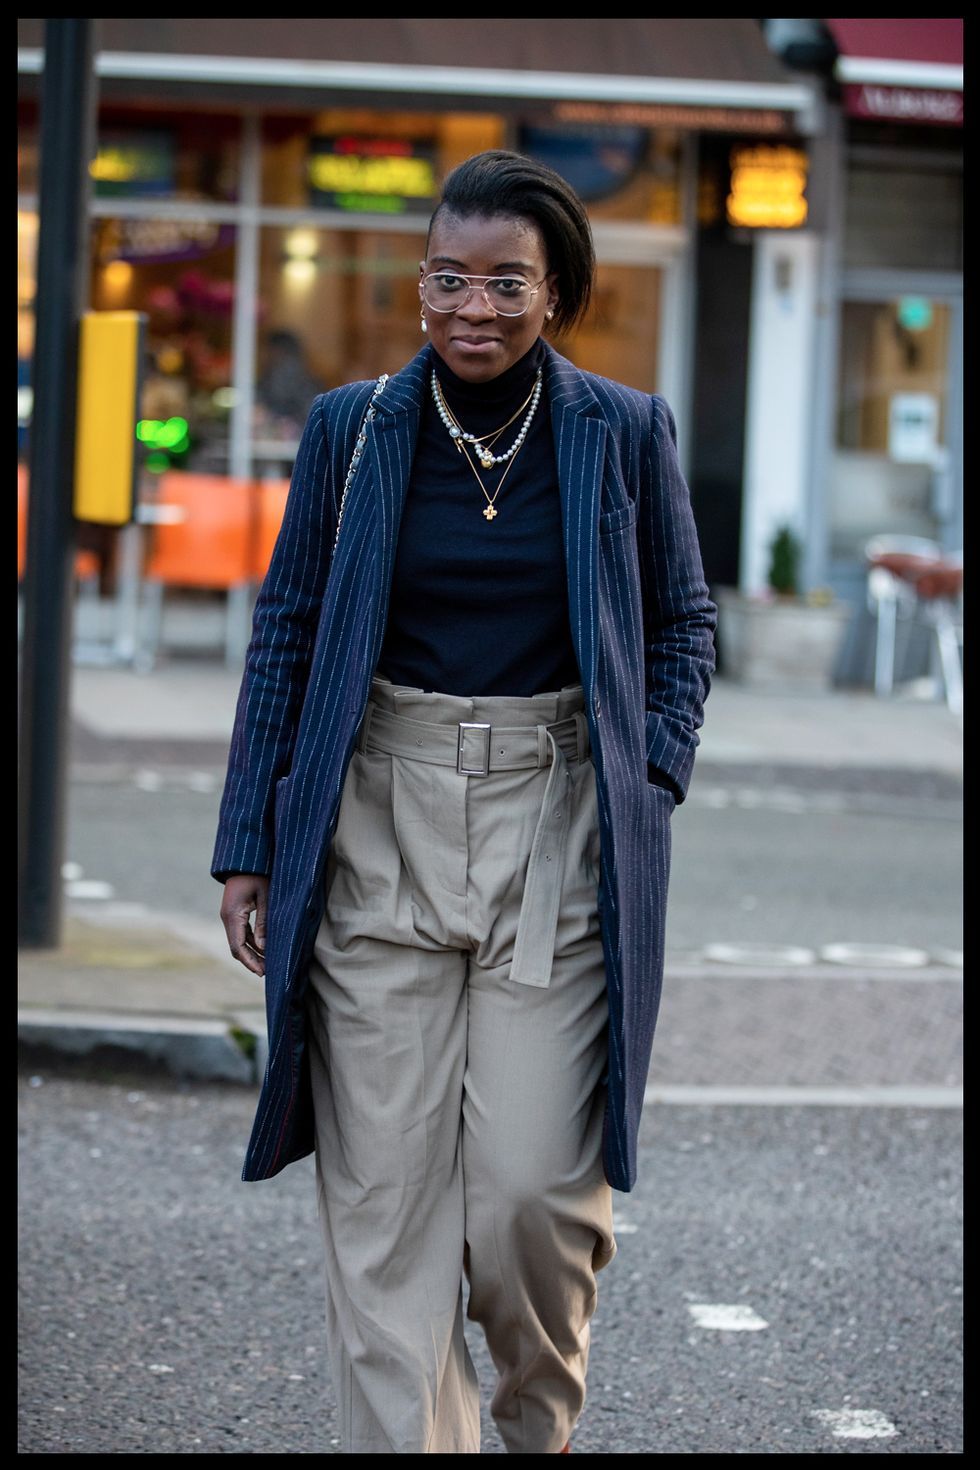 nikki ogunnaike walks on a street in new york city to illustrate her style resolution for 2022